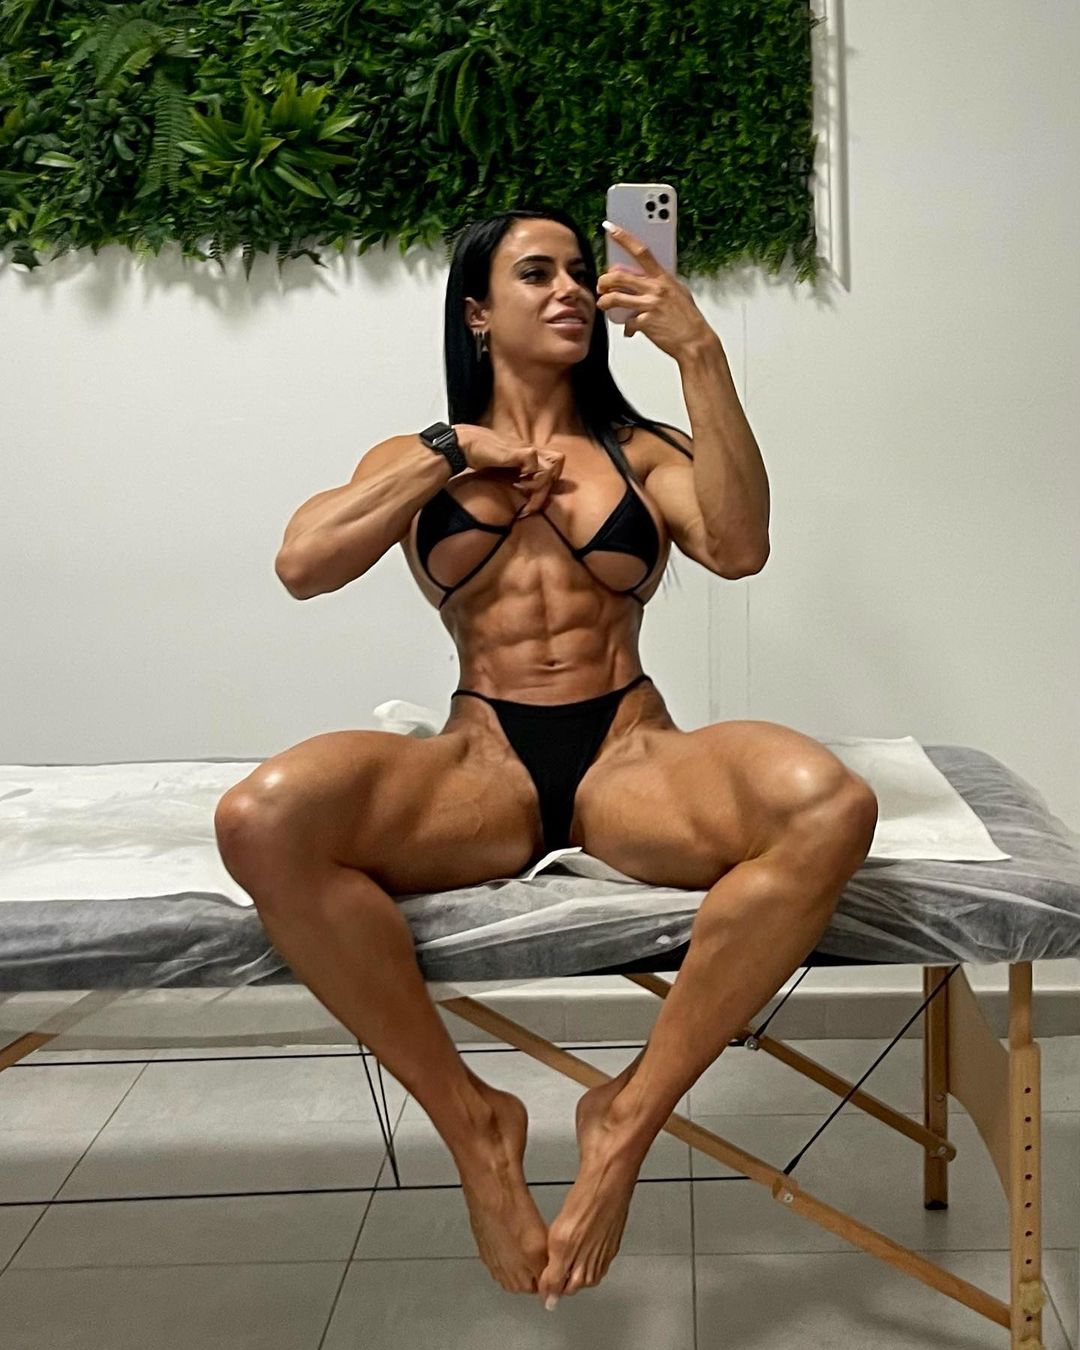 Alicia romero fitness